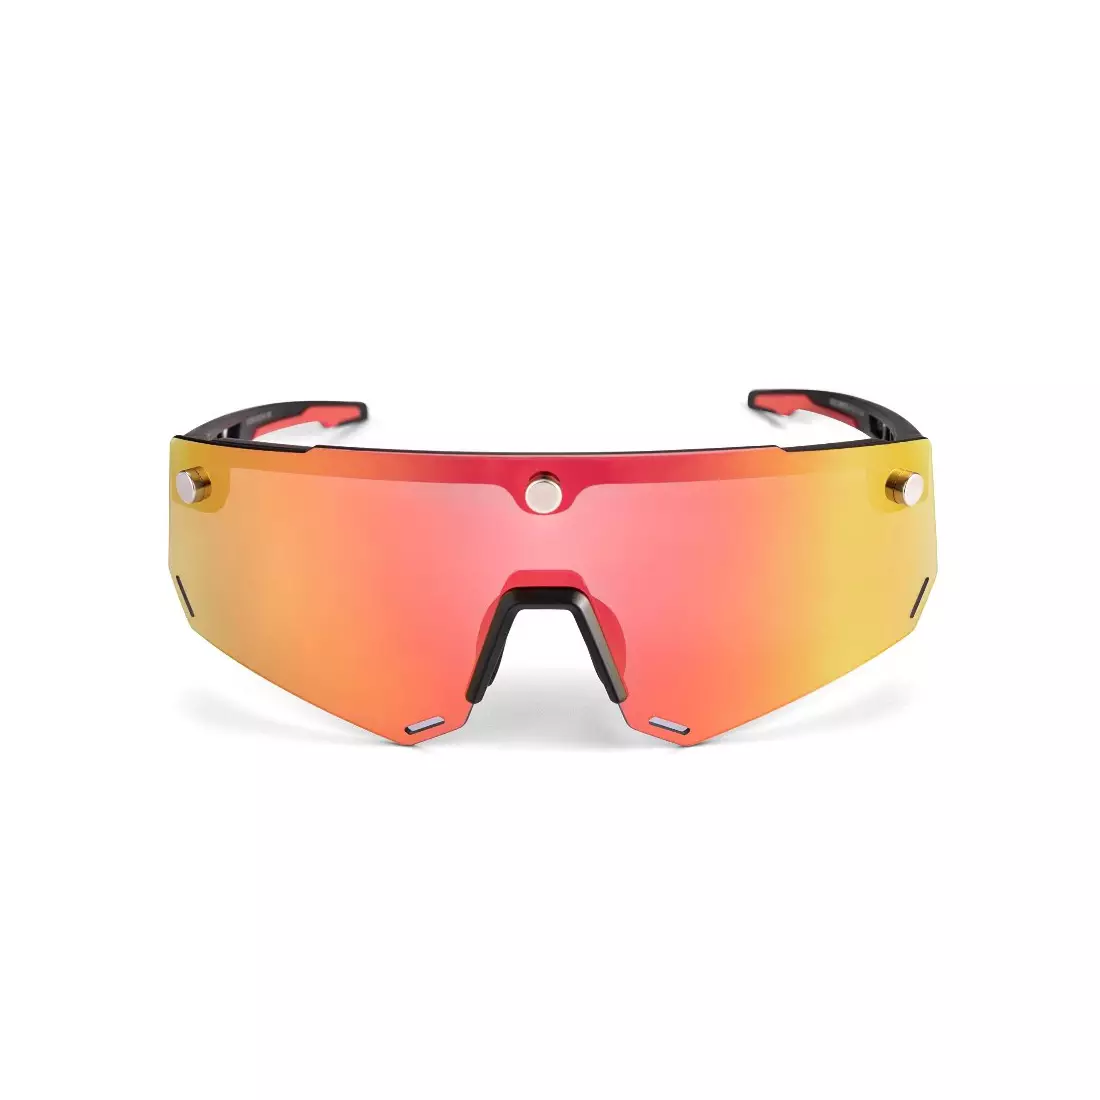 Rockbros SP213BK bicycle / sports glasses with polarized lens black 